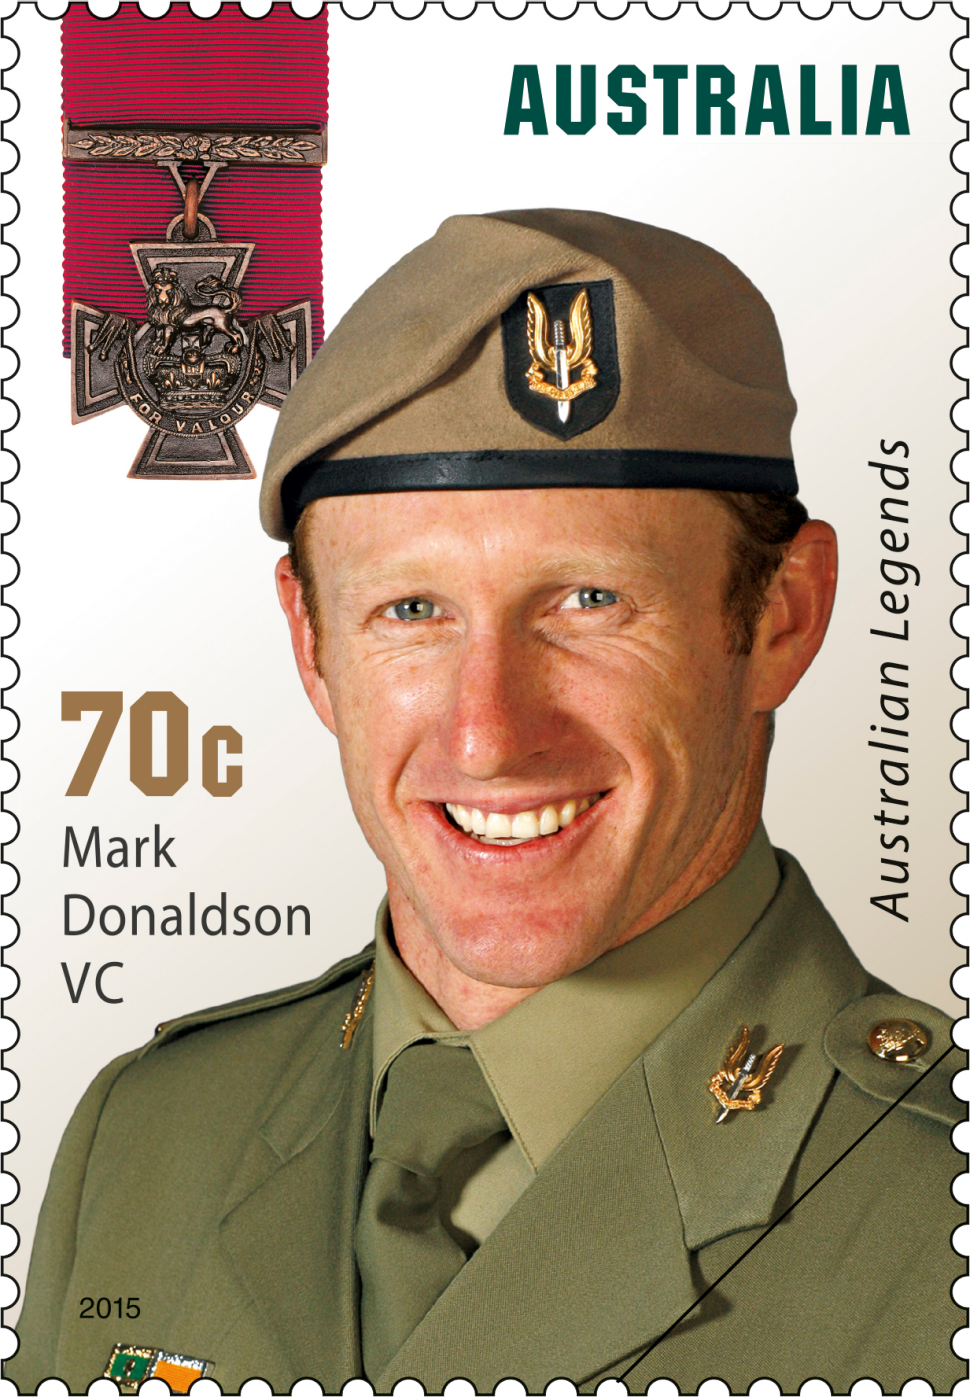 70c Mark Donaldson VC